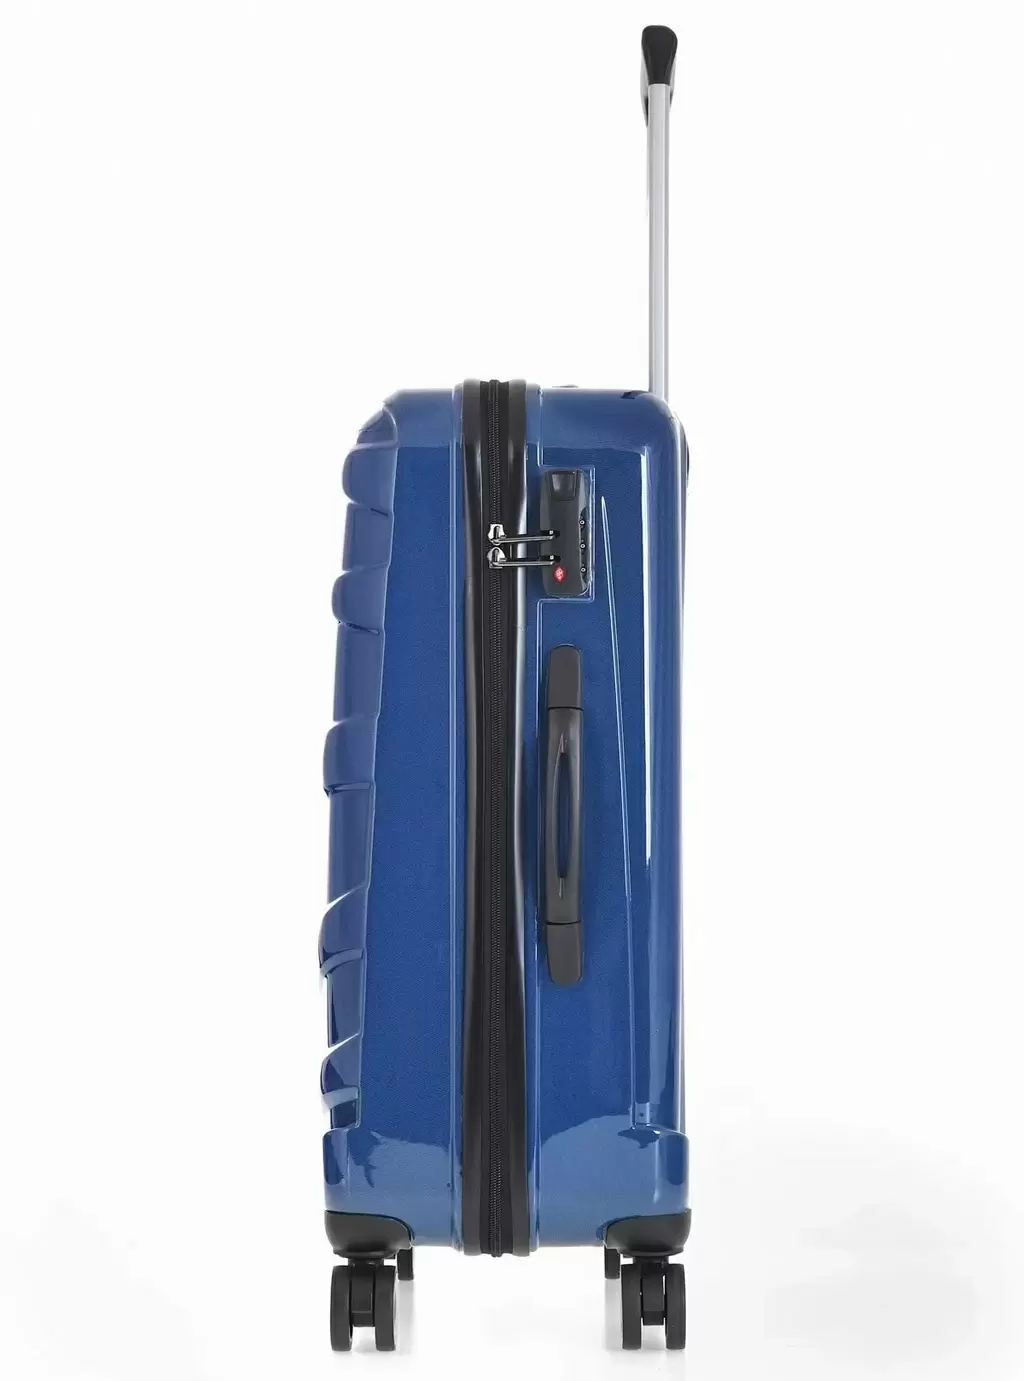 Set de valize CCS 5229 Set, albastru